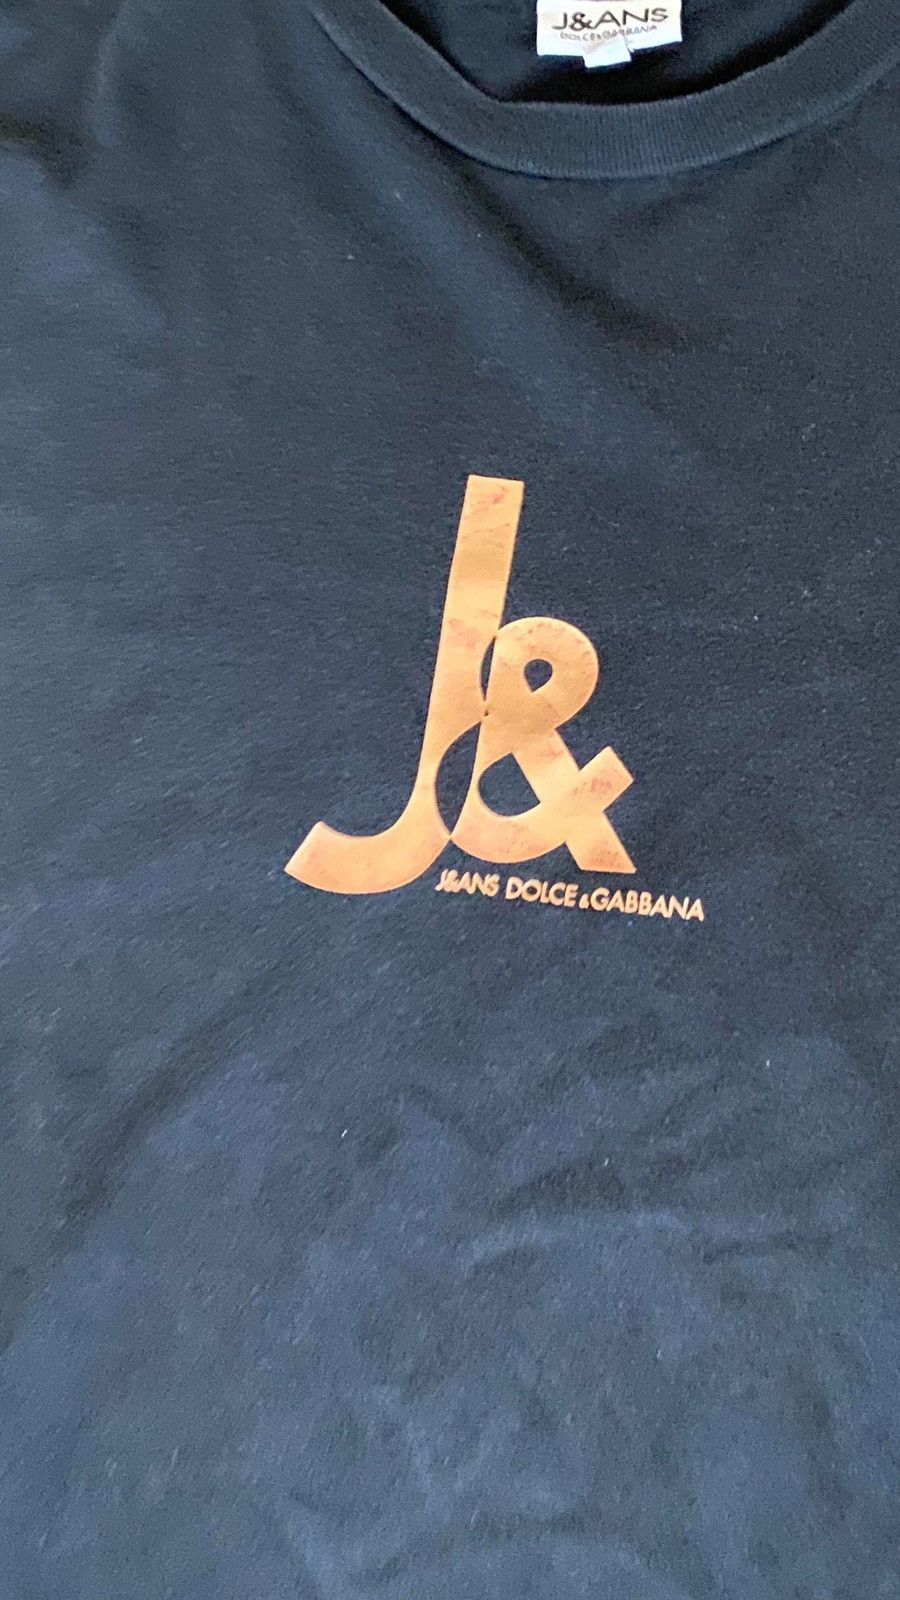 Dolce & Gabbana Dolce & Gabbana Large Black Graphic T Shirt Size US L / EU 52-54 / 3 - 4 Thumbnail